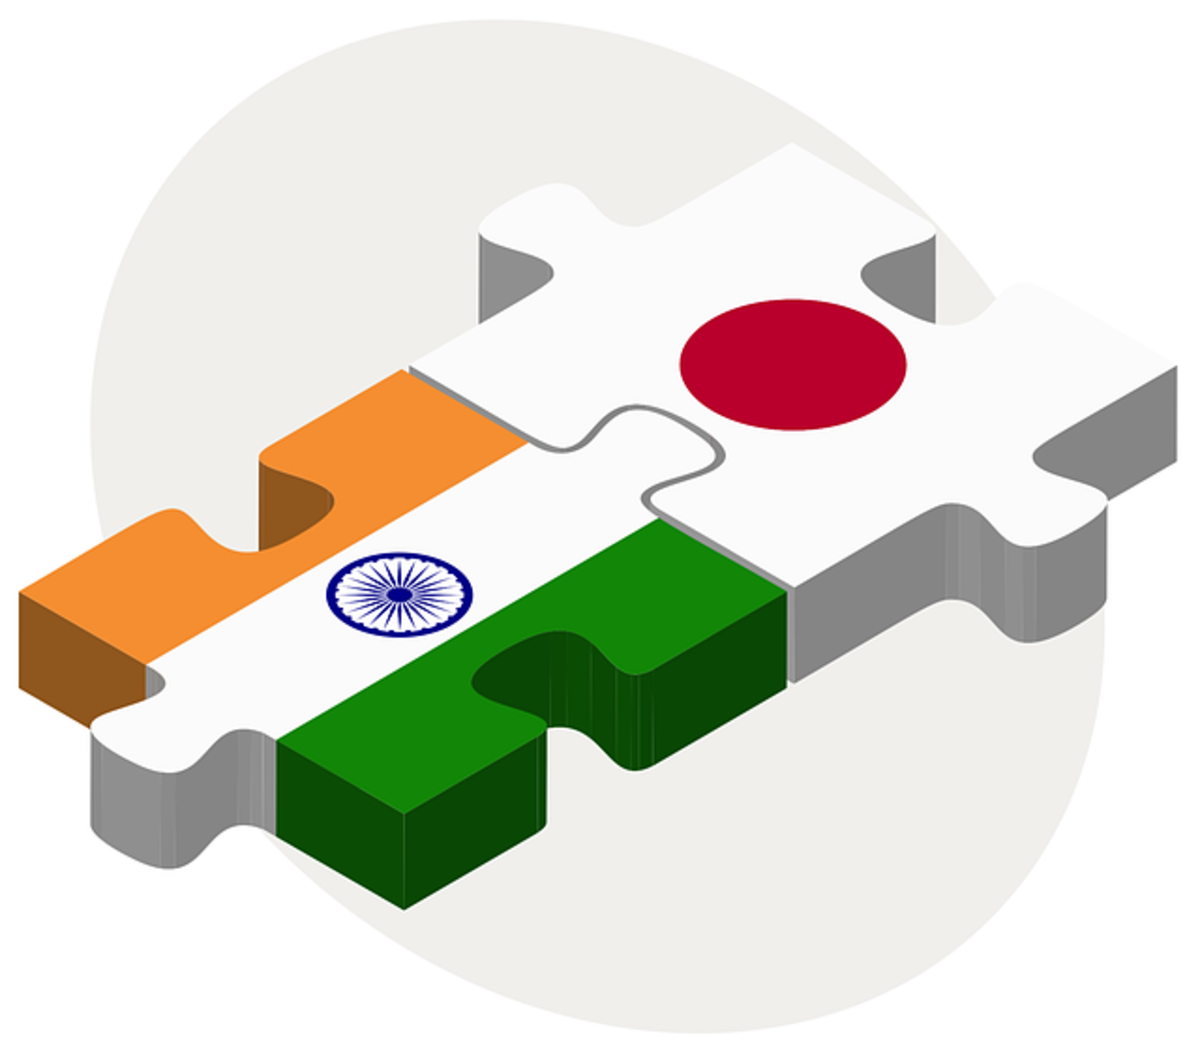 Japan heavily investing in India